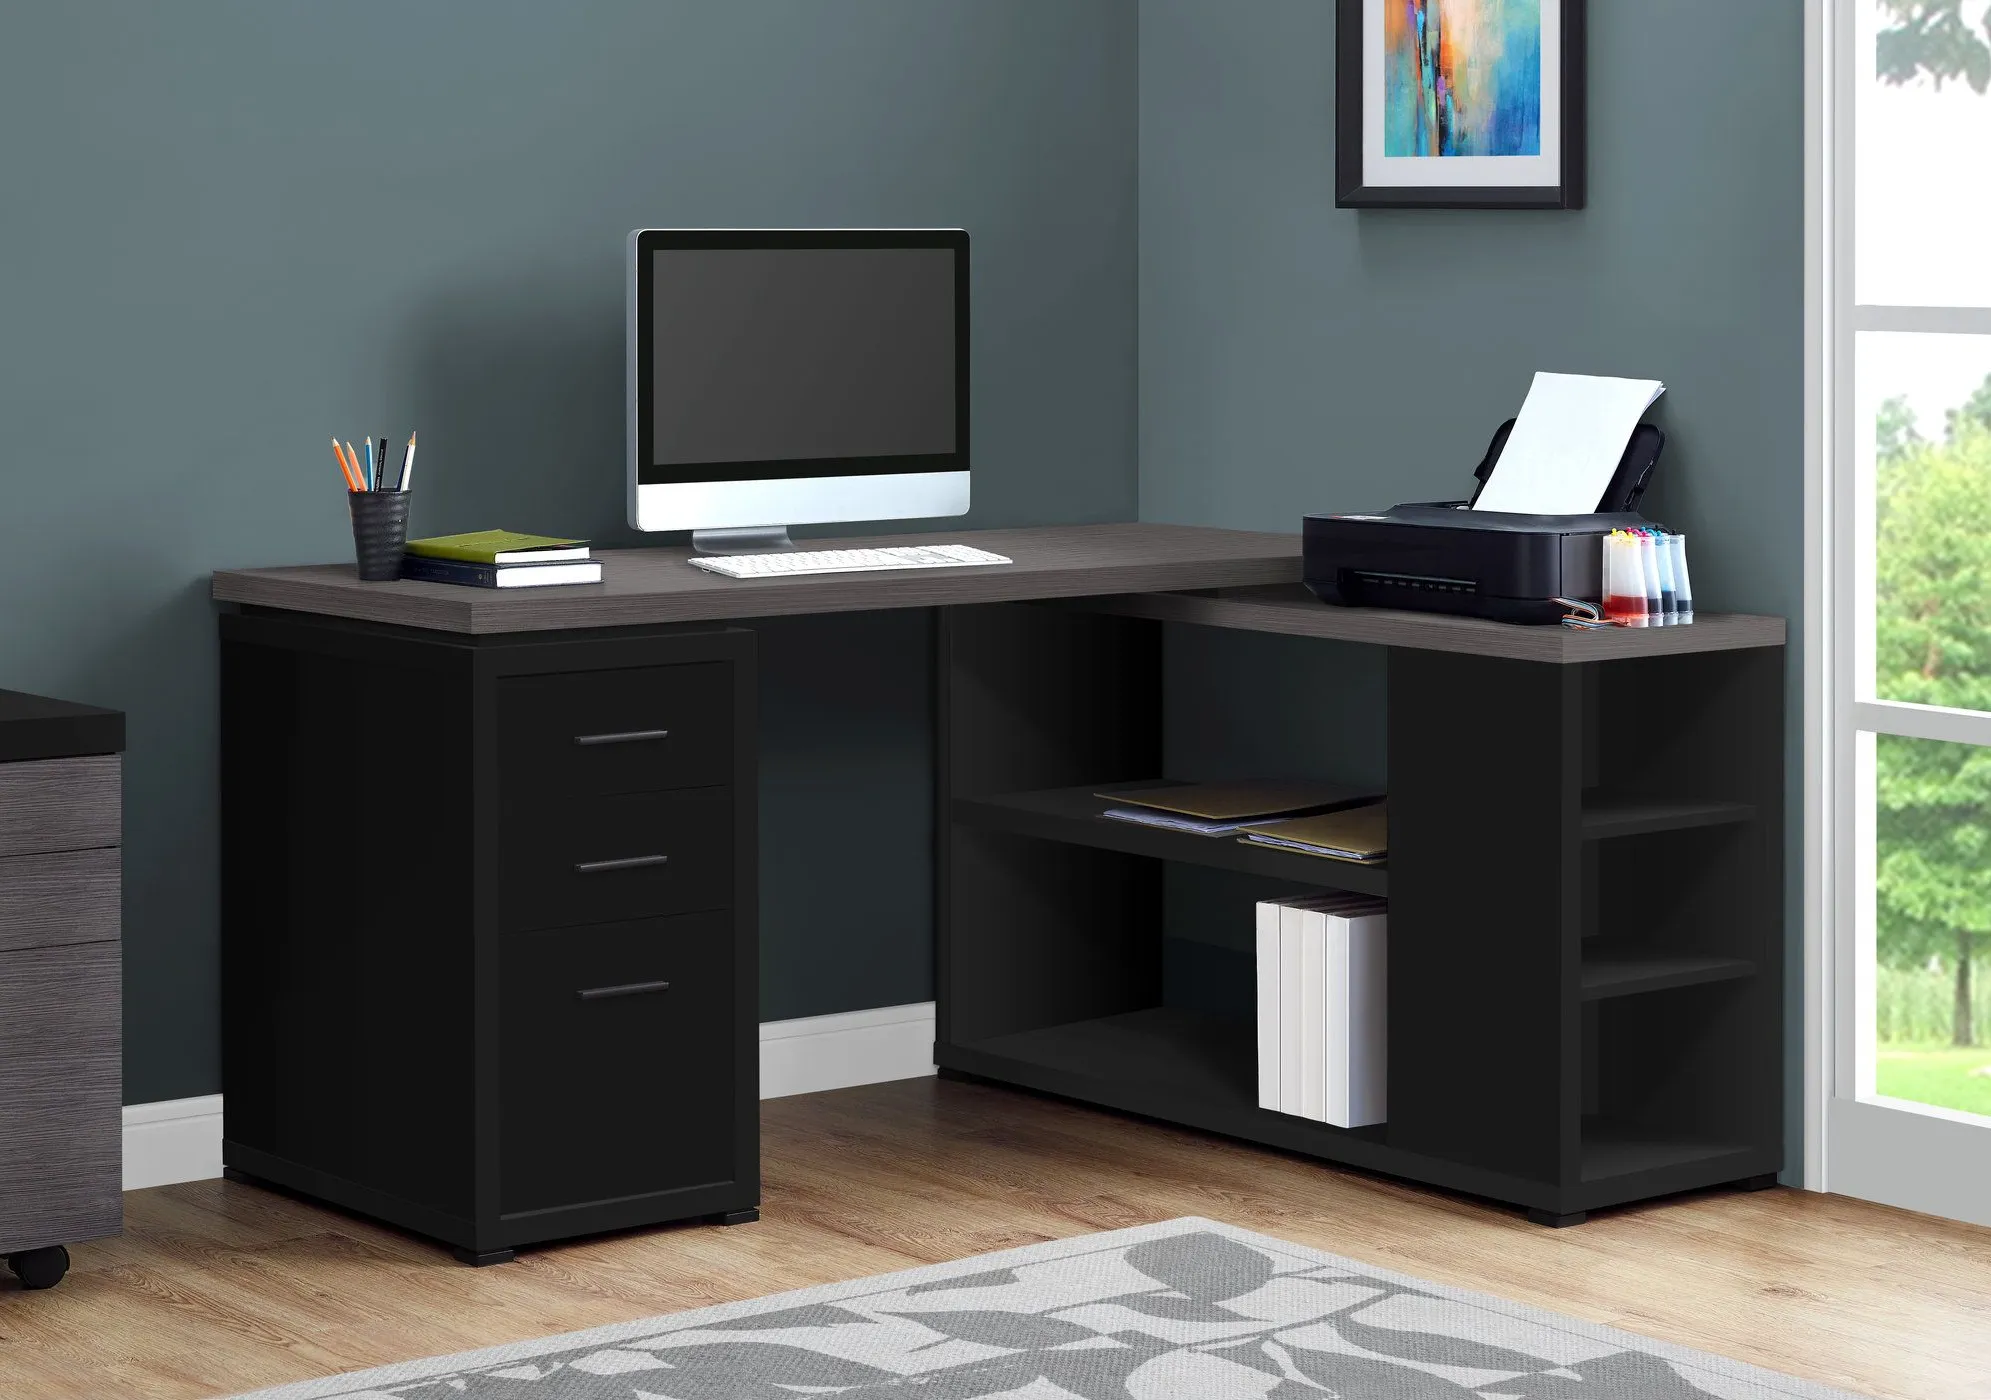 Computer Desk, Home Office, Corner, Left, Right Set-Up, Storage Drawers, L Shape, Work, Laptop, Laminate, Black, Grey, Contemporary, Modern